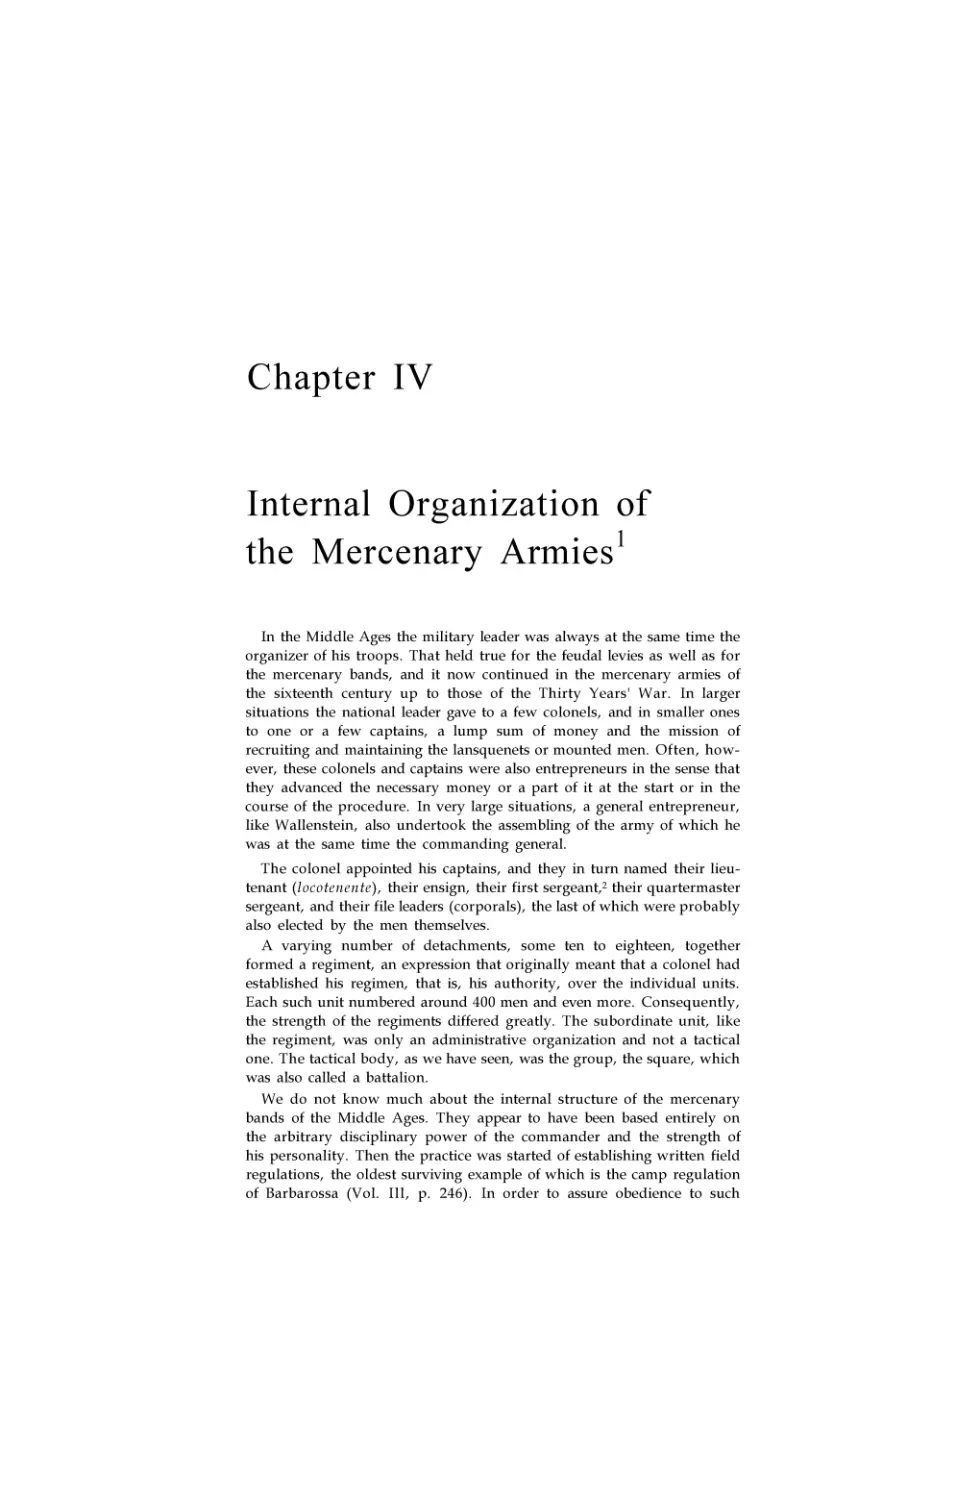 Internal Organization of the Mercenary Armies